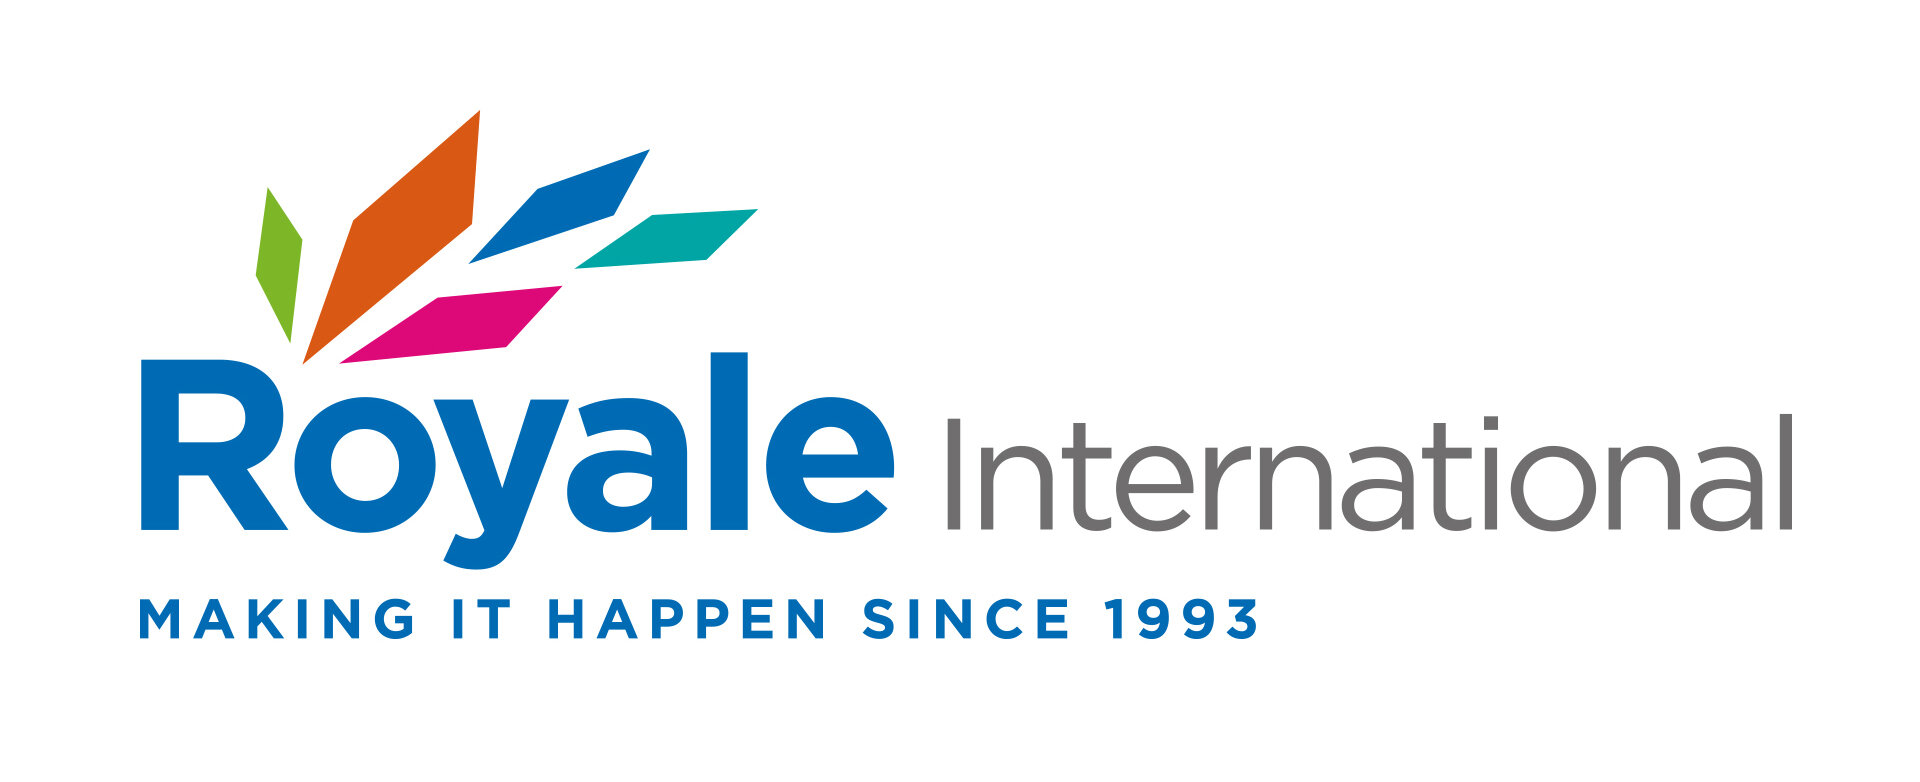 royale international logo (32) - Thom Muilwijk.jpg